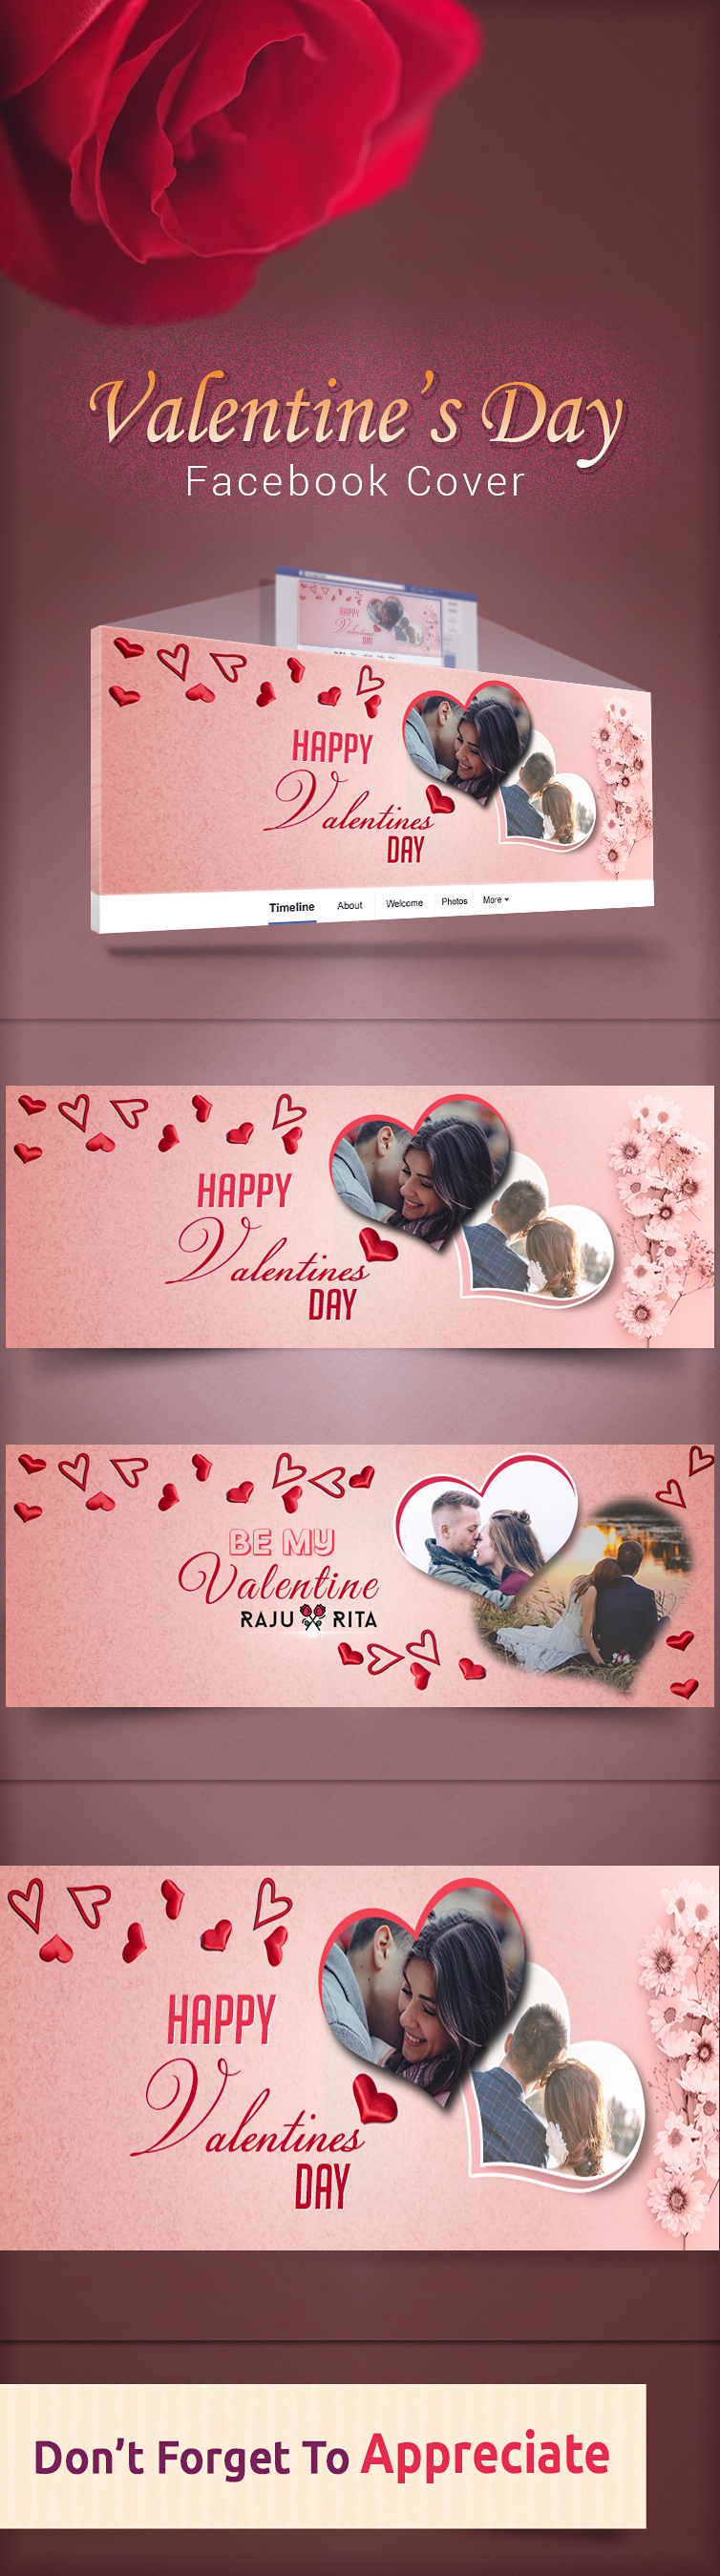 free facebook cover valentine Love fb freebie psd download social media valentines